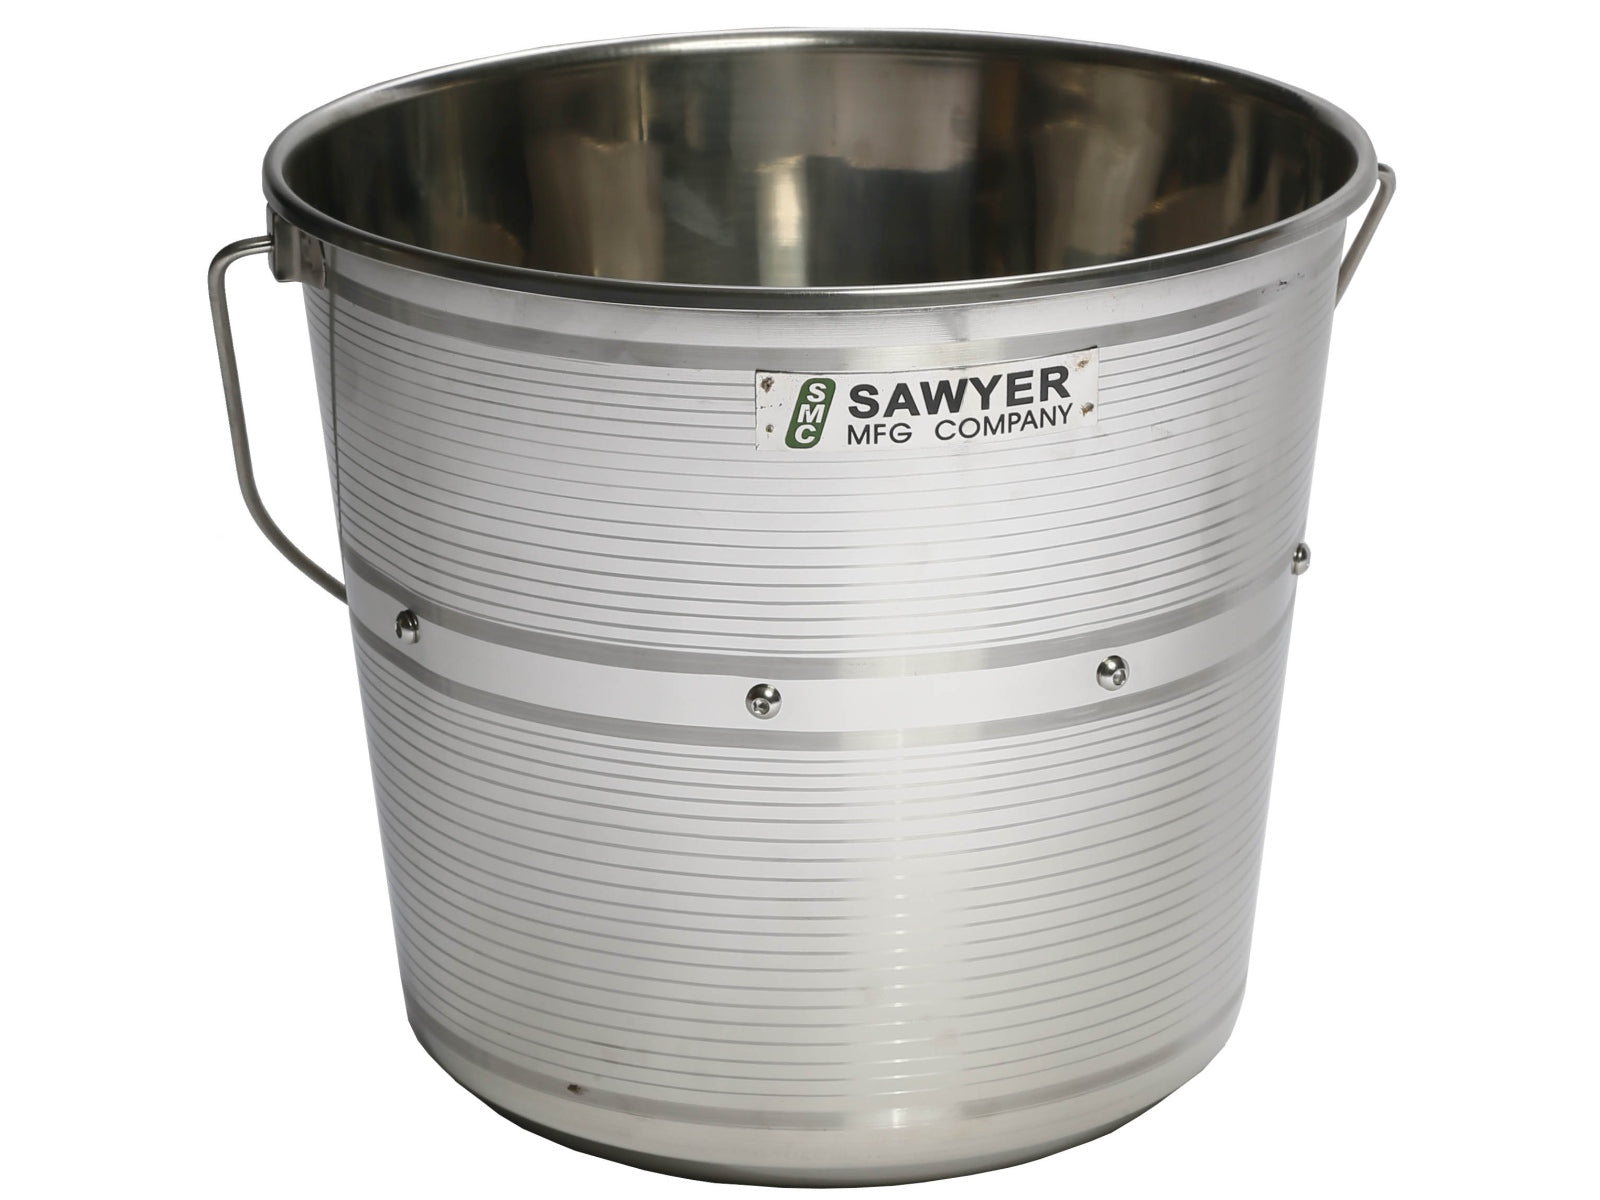 Sawyer Welding Rod Bucket Stainless 4.5 Gallon